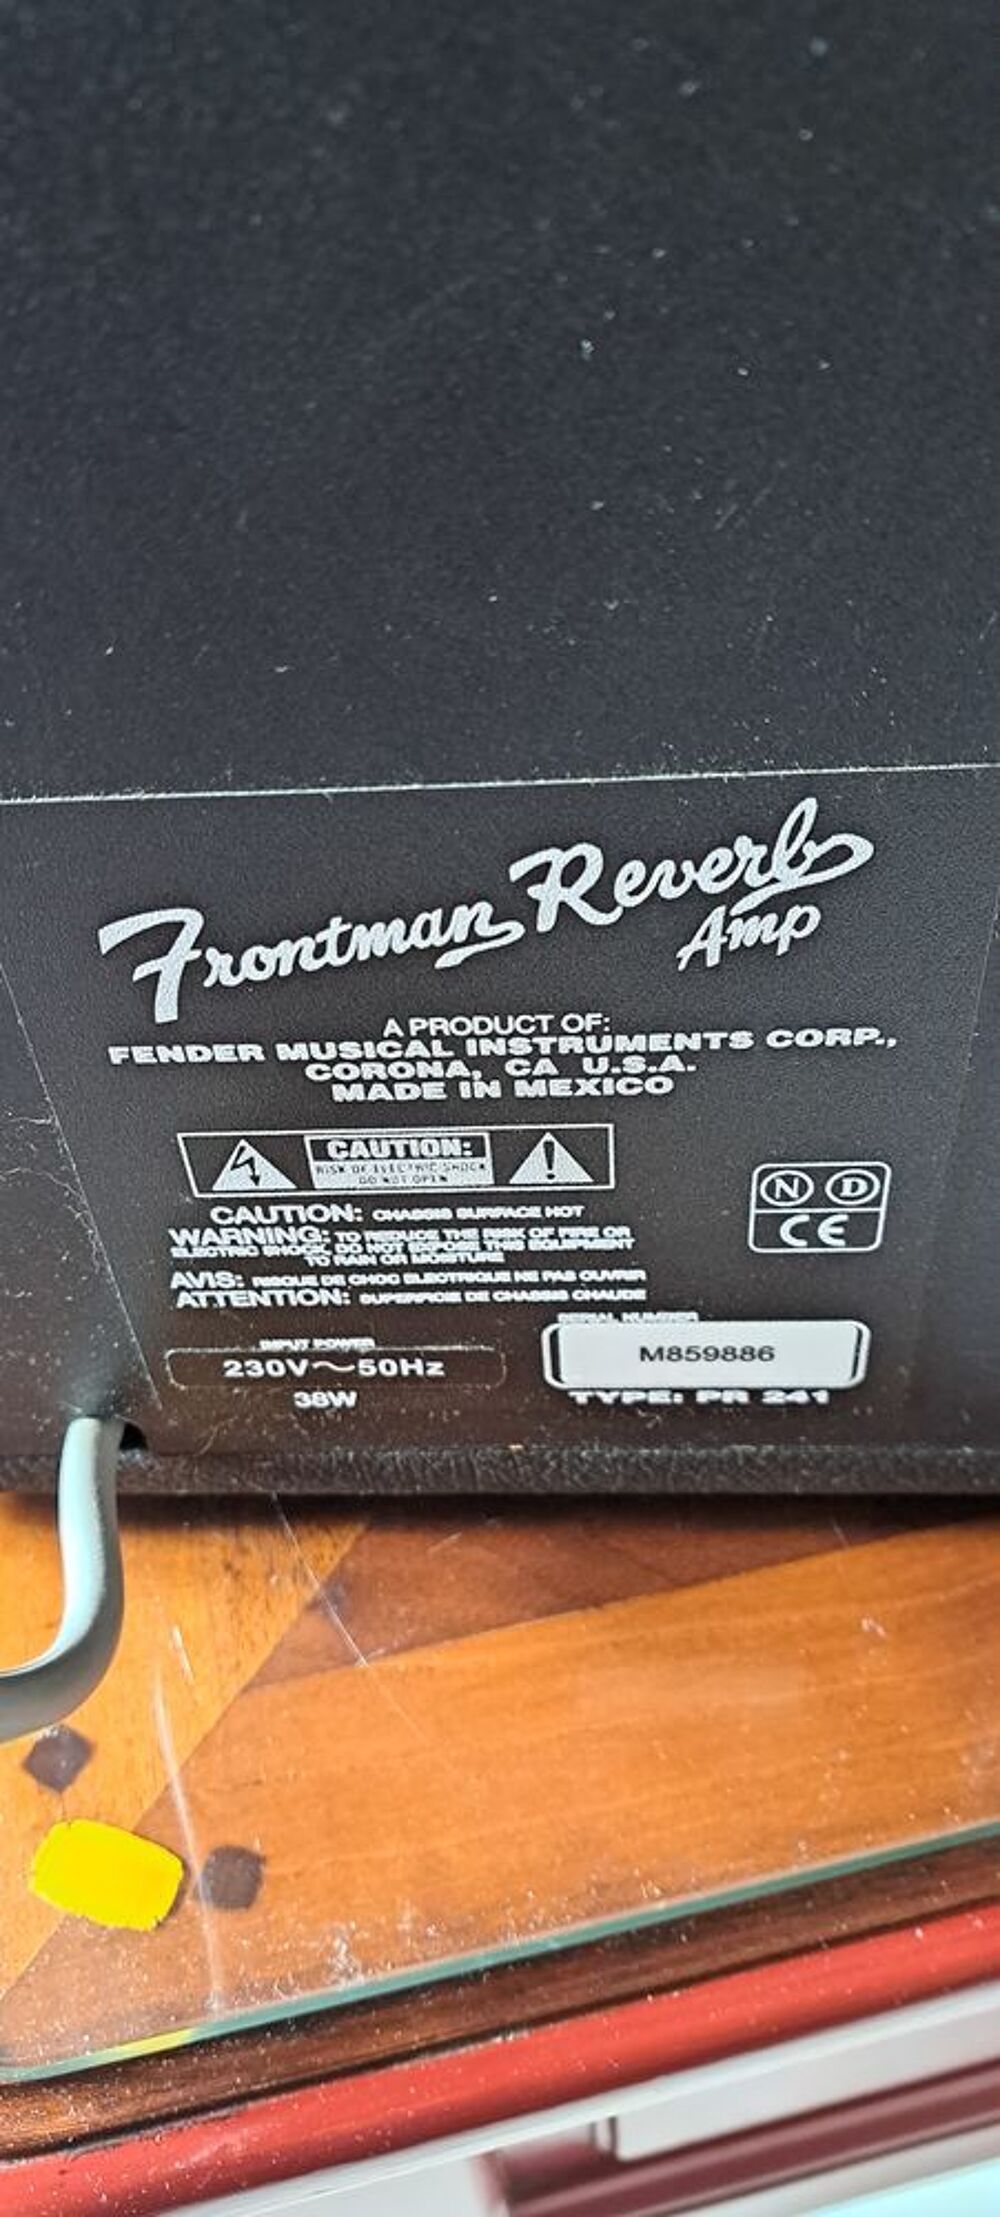 Ampli Fender Frontman Reverb 15 watts Instruments de musique